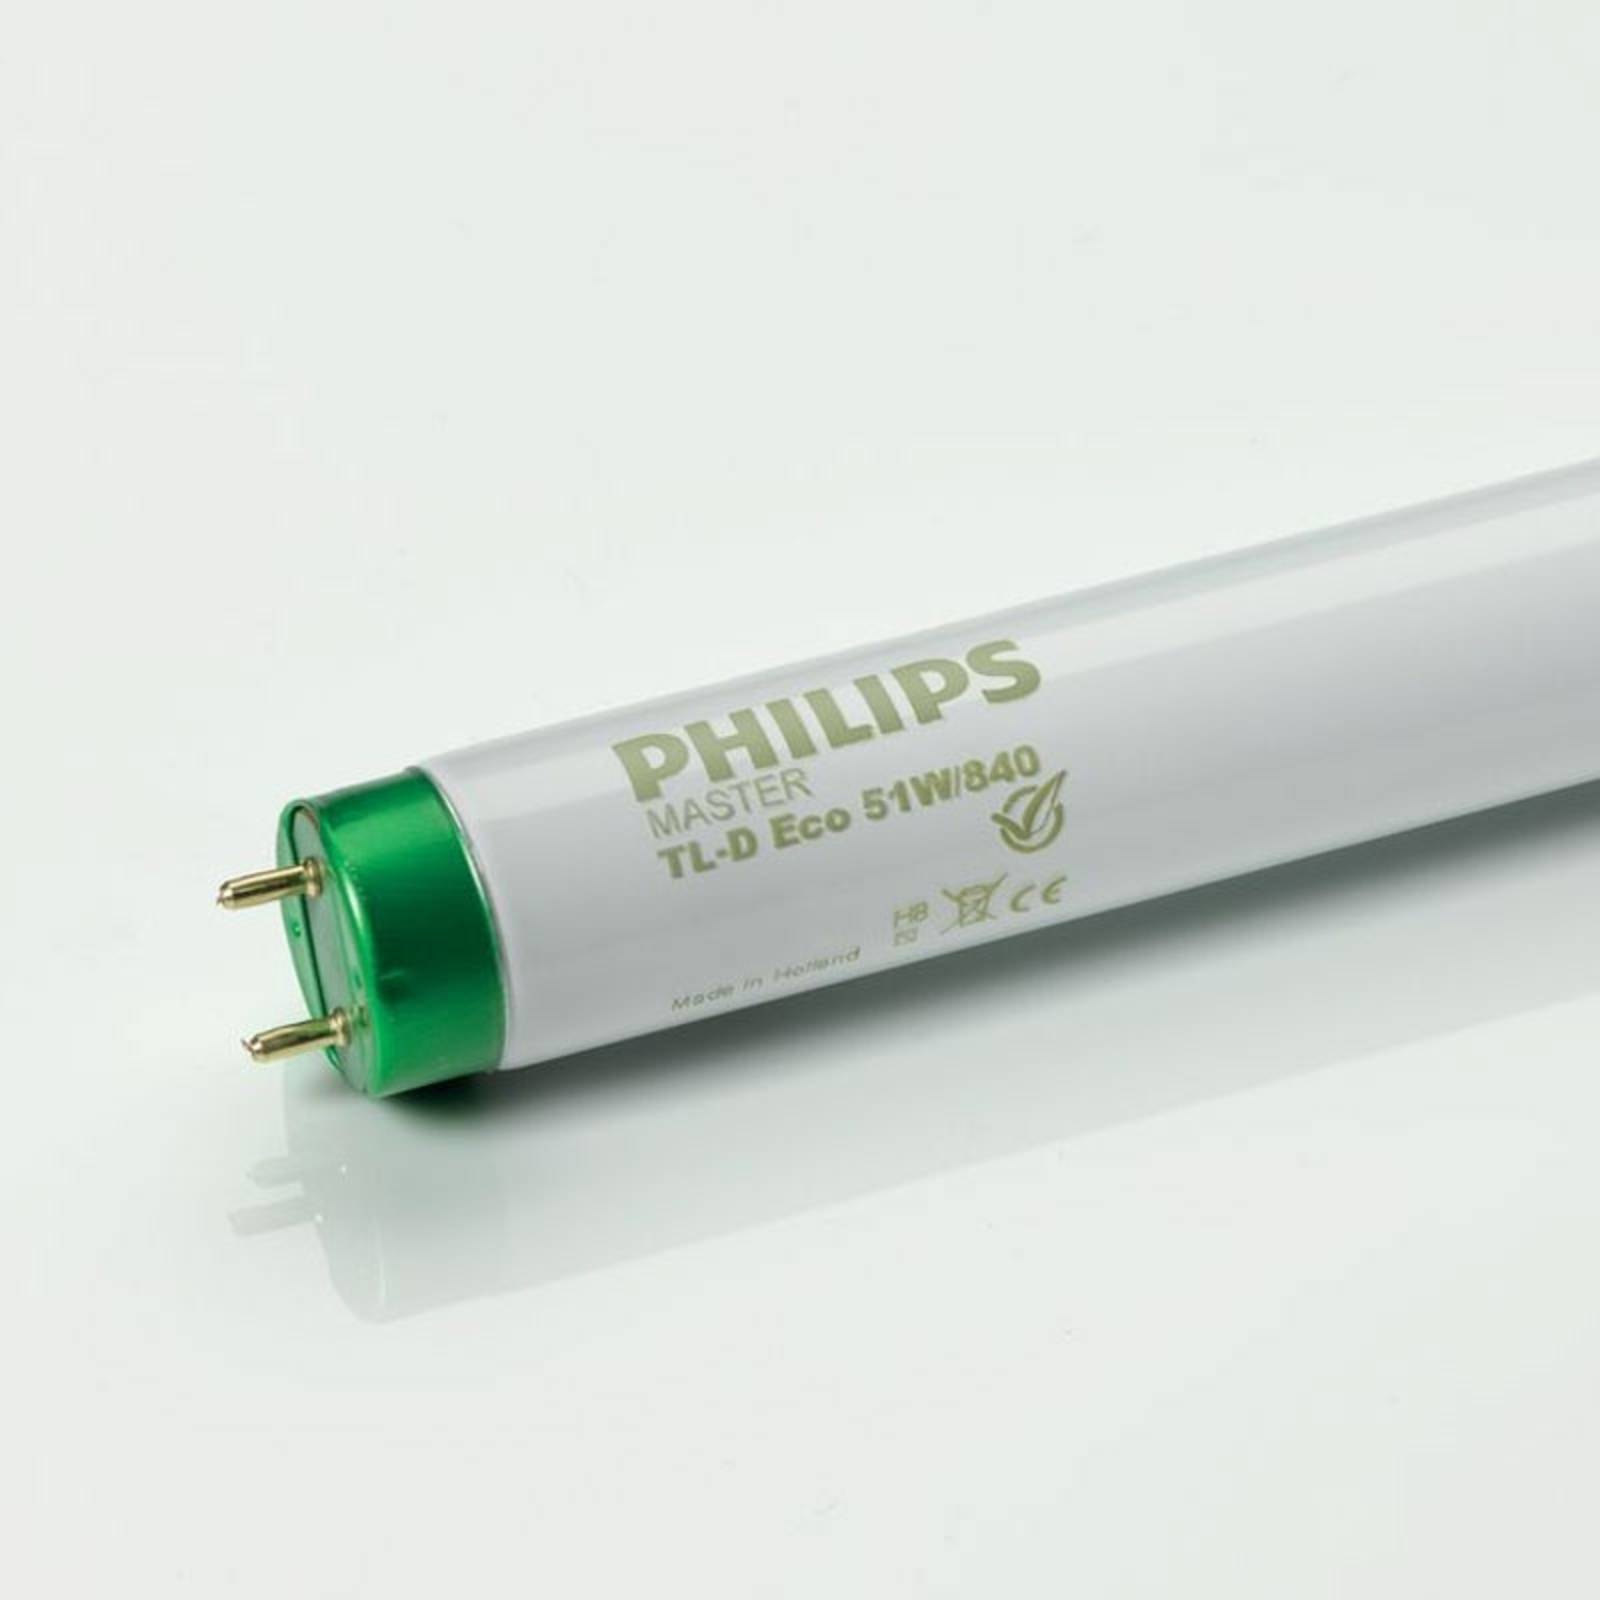 Philips Zářivka G13 T8 Master TL-D Eco 865 32W